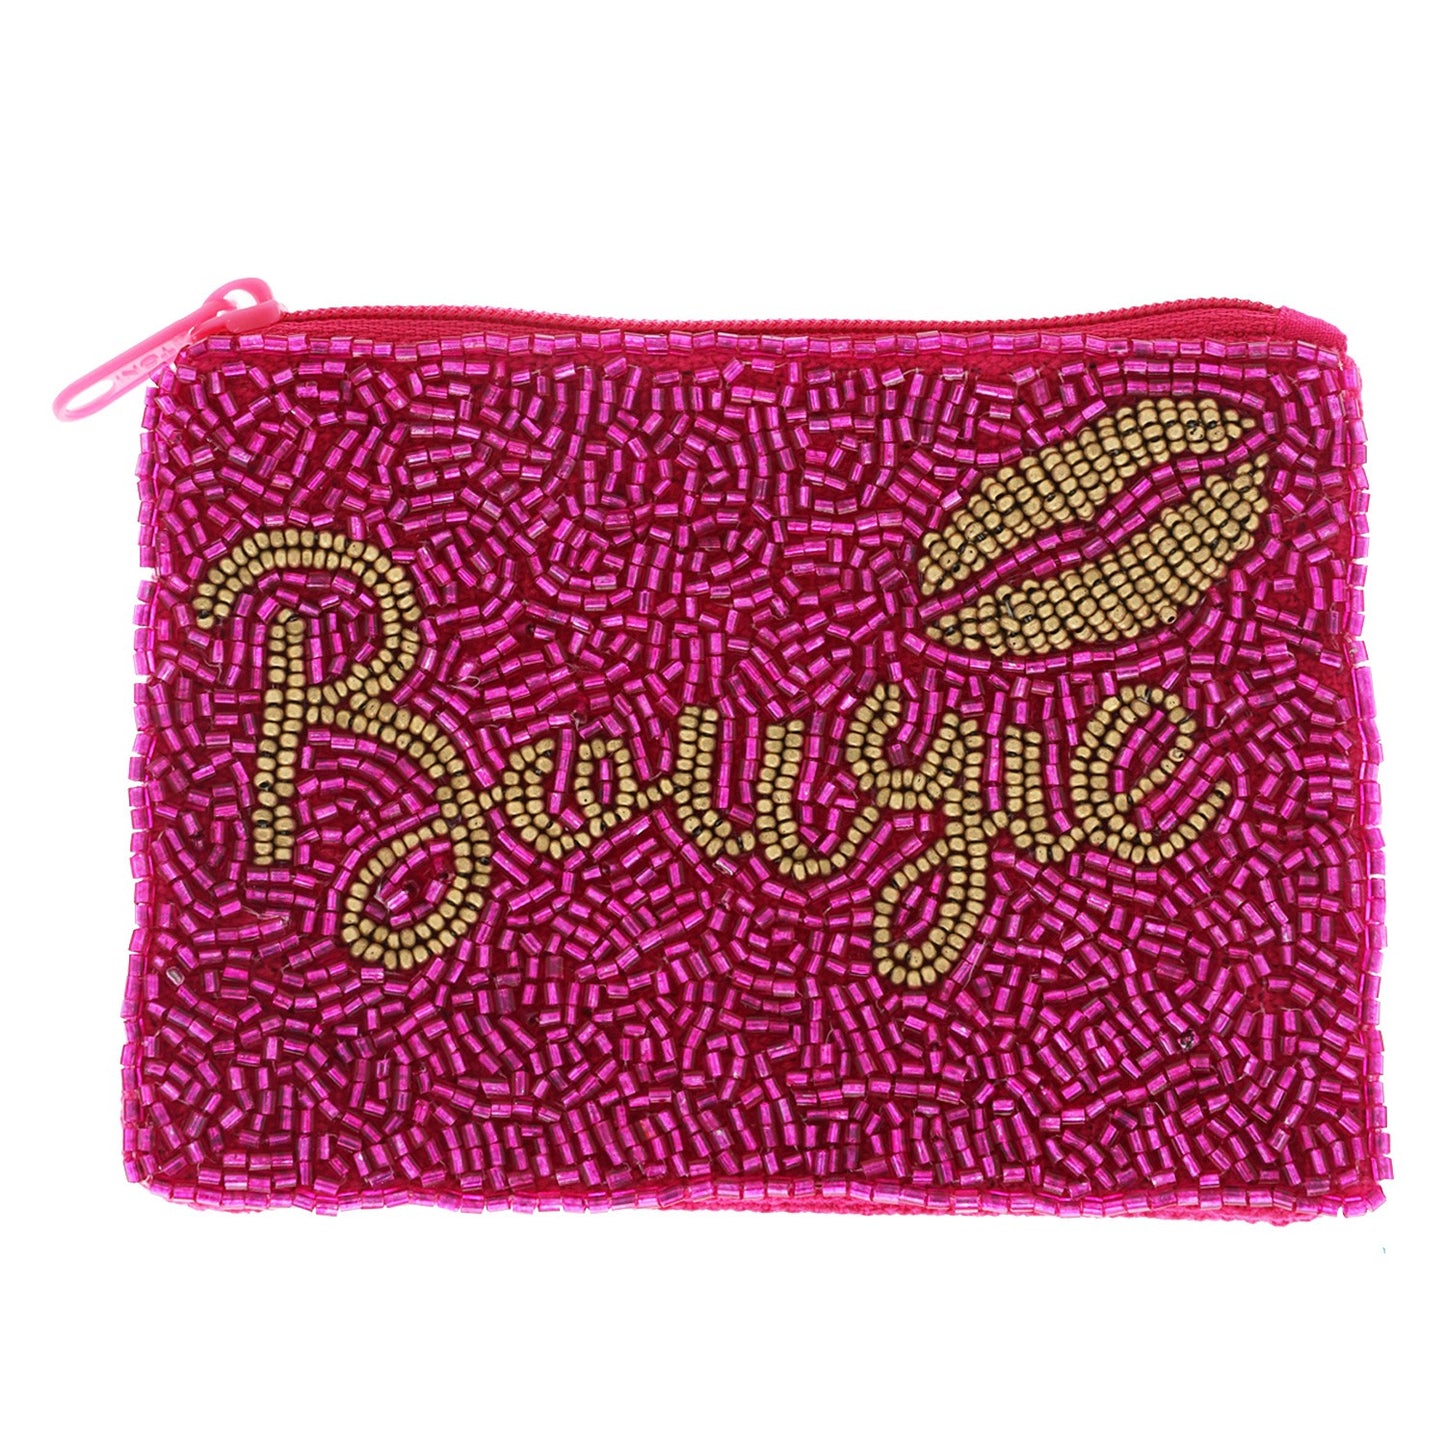 BOUGIE SEED BEAD HANDMADE BEADED ZIPPER COIN CARD MONEY POUCH/PURSE/BAG